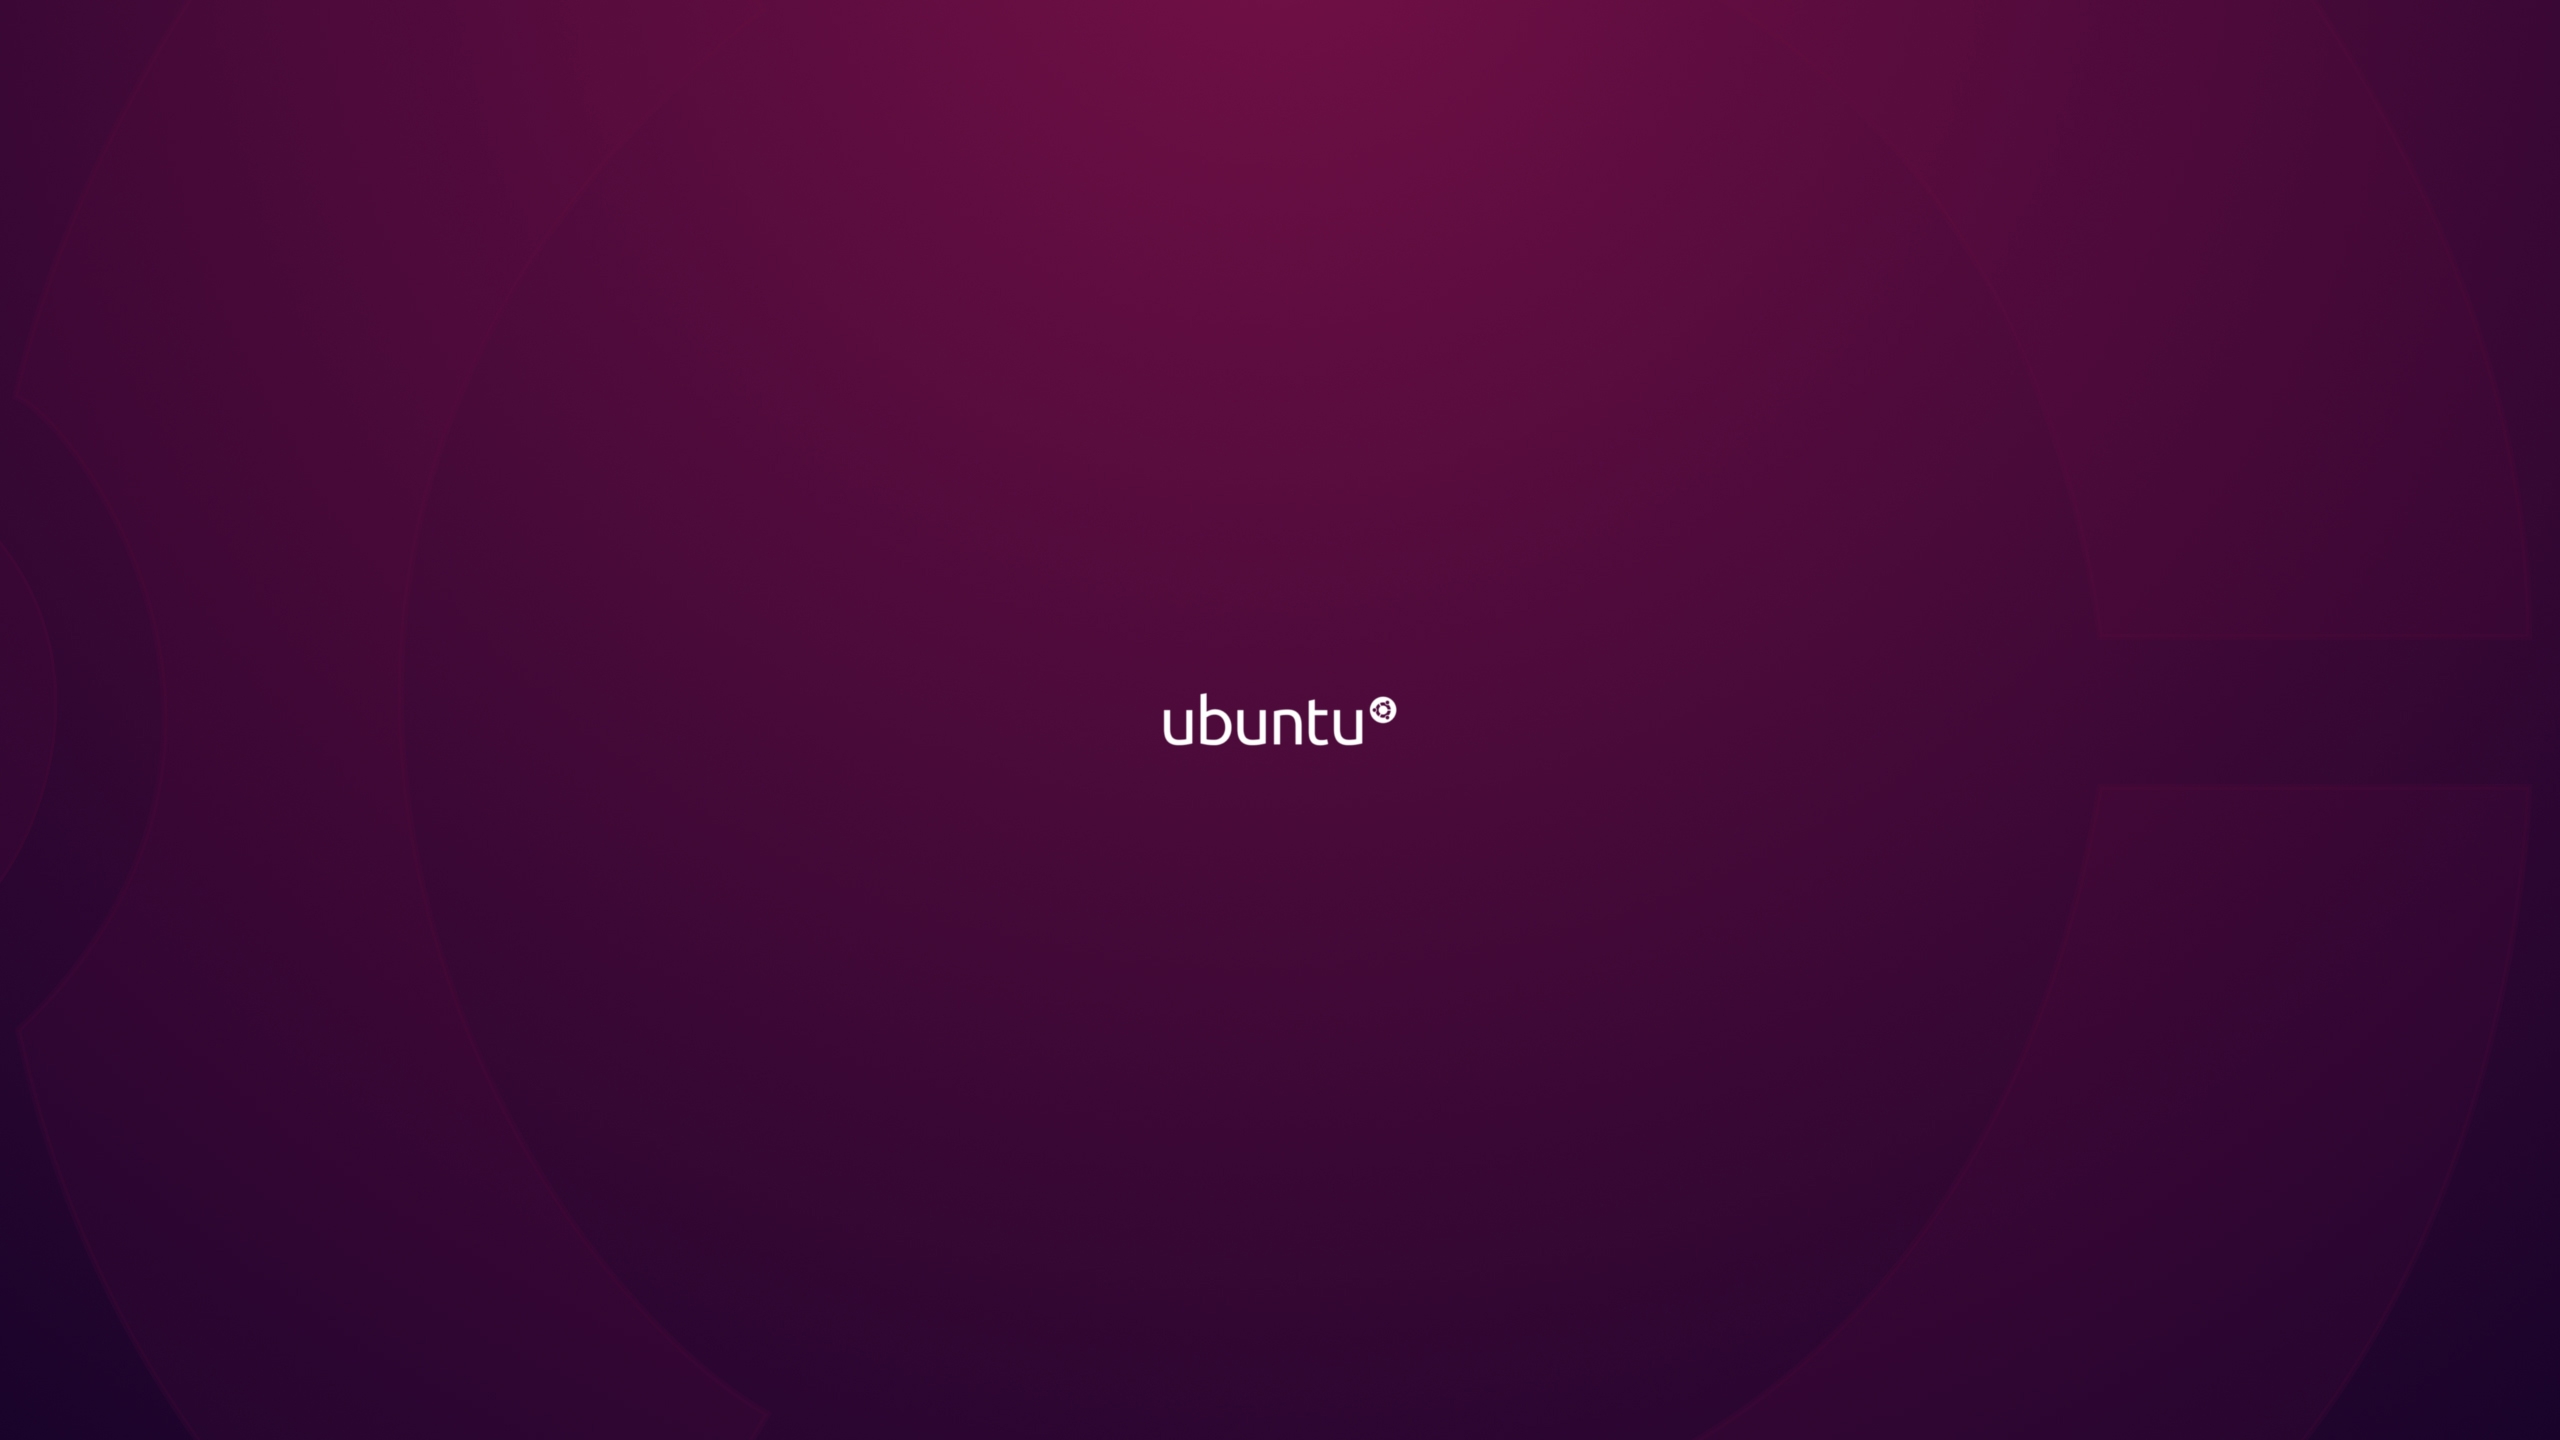 Ubuntu Purple Hq Wallpaper High Quality